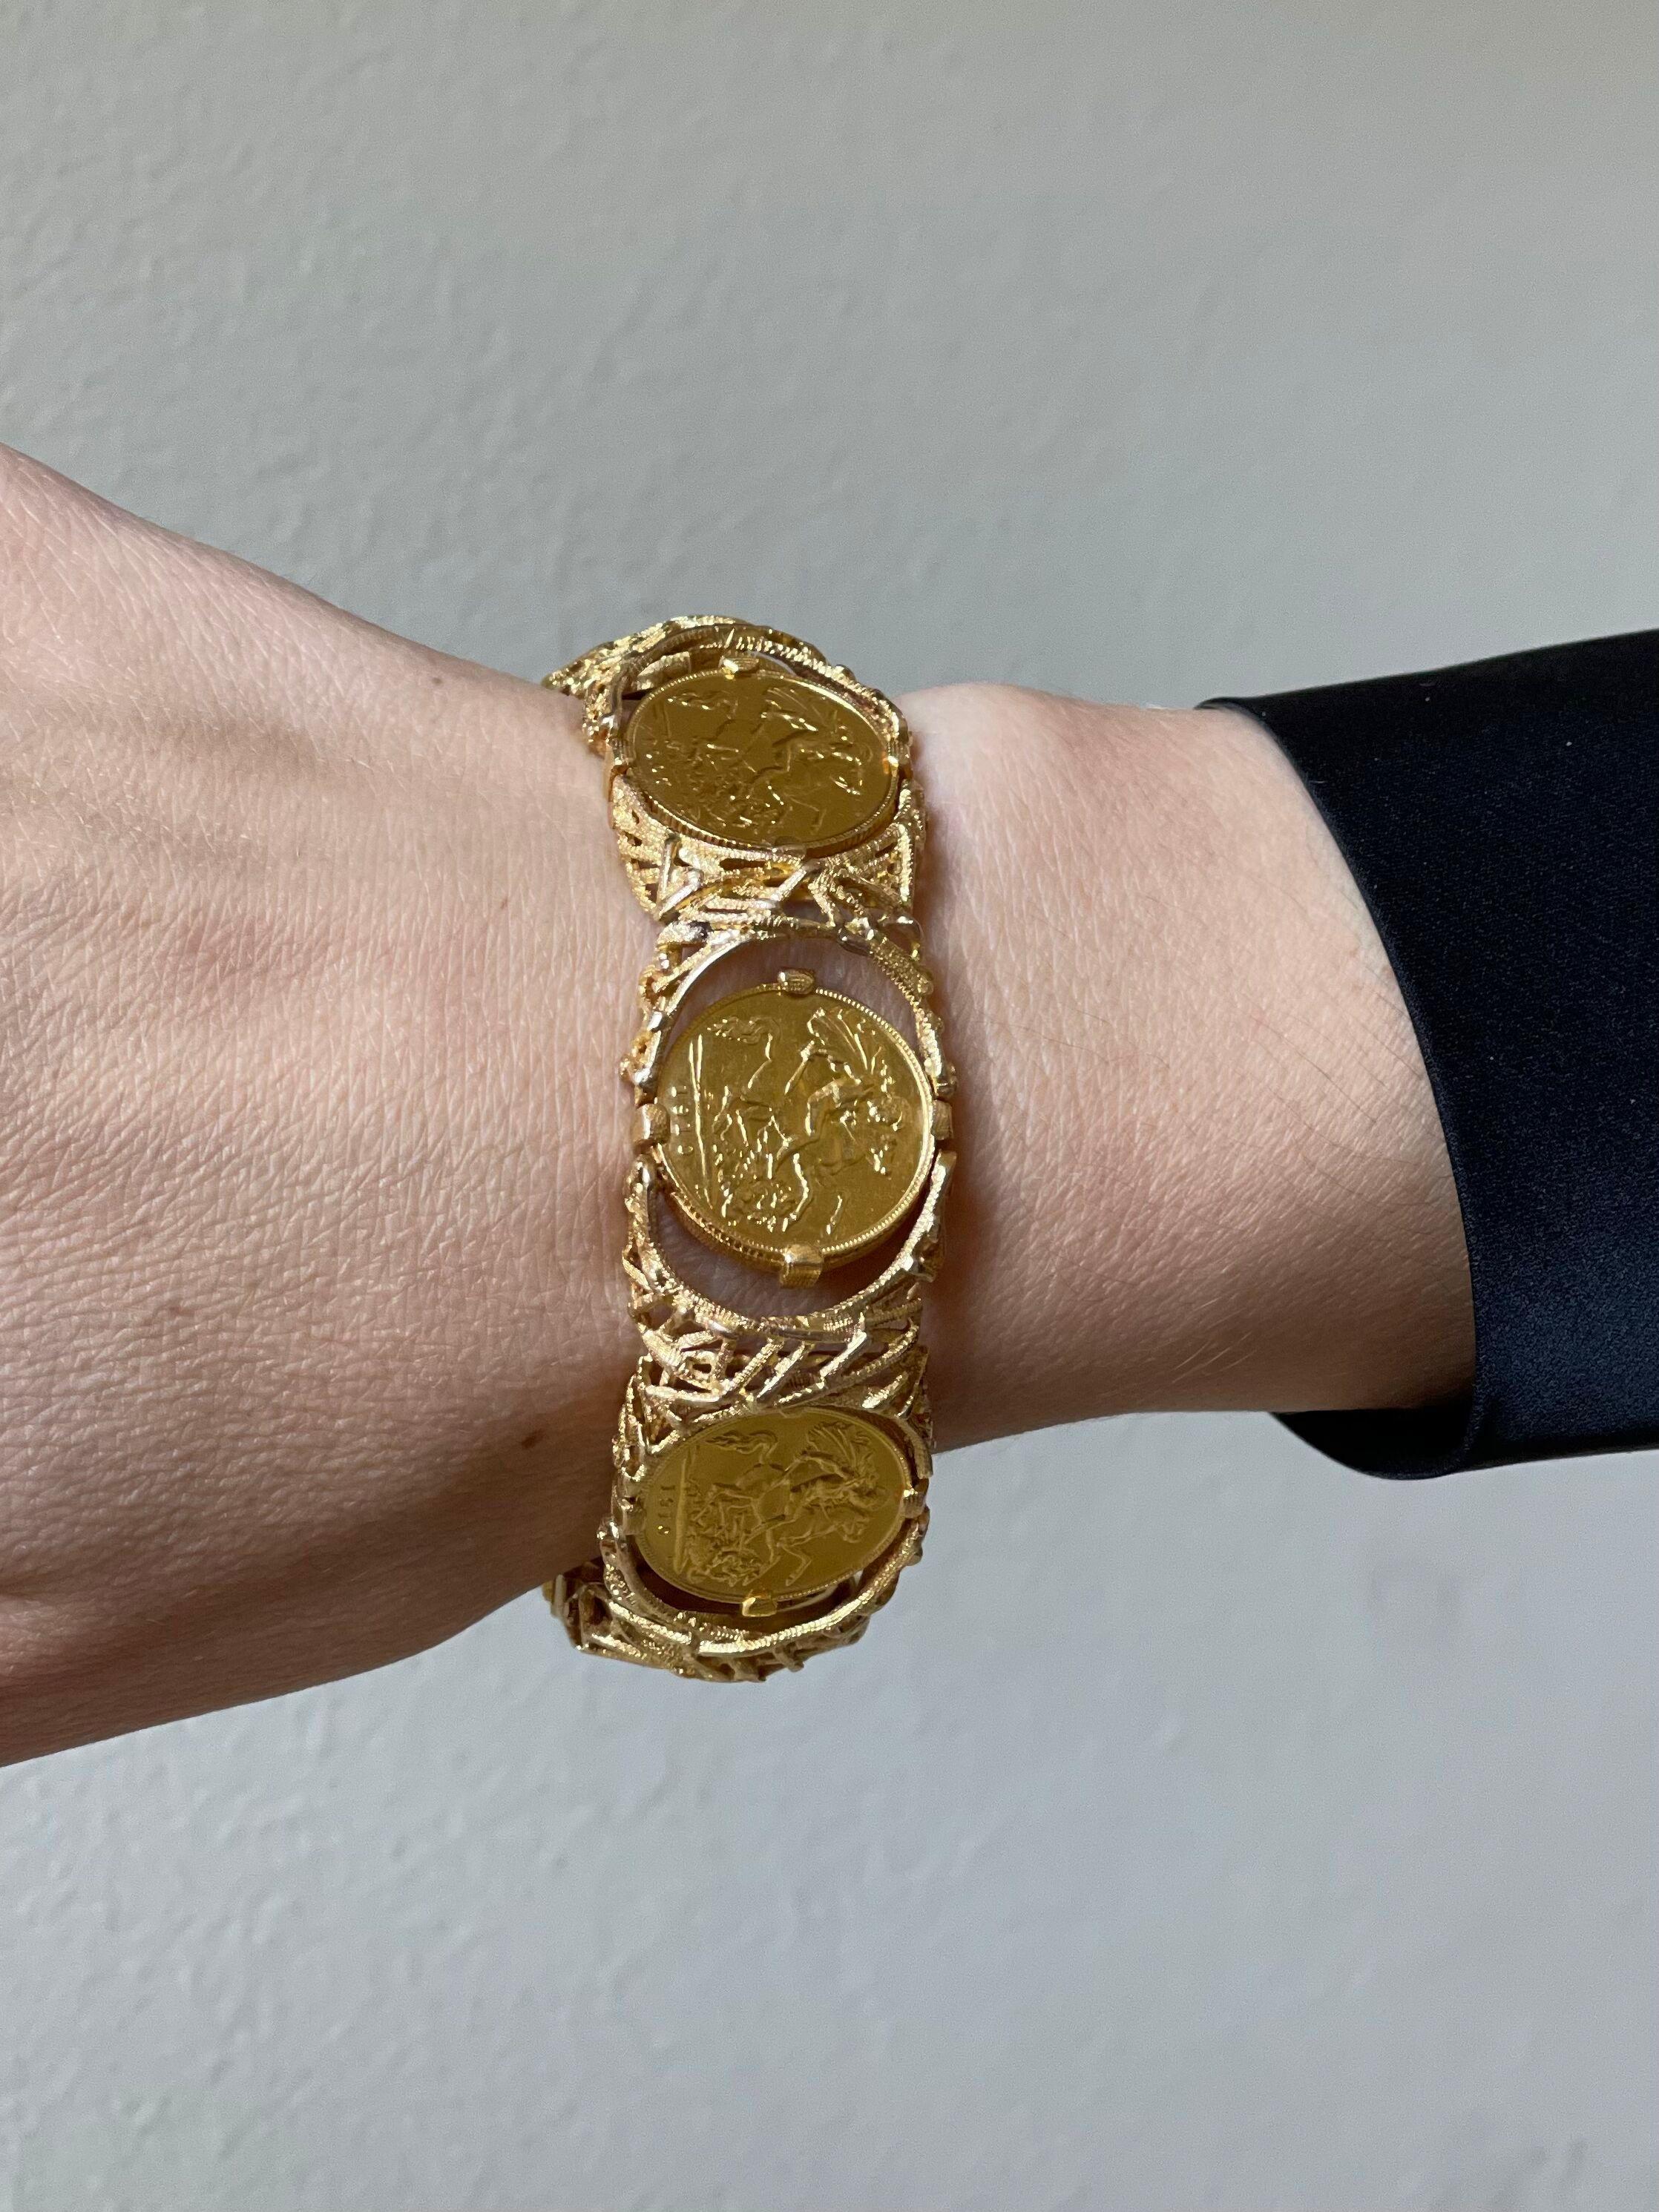 Vintage, circa 1970s 18k gold bracelet, featuring sticks design set with 7 gold coins. Bracelet is 7.25' long and 1